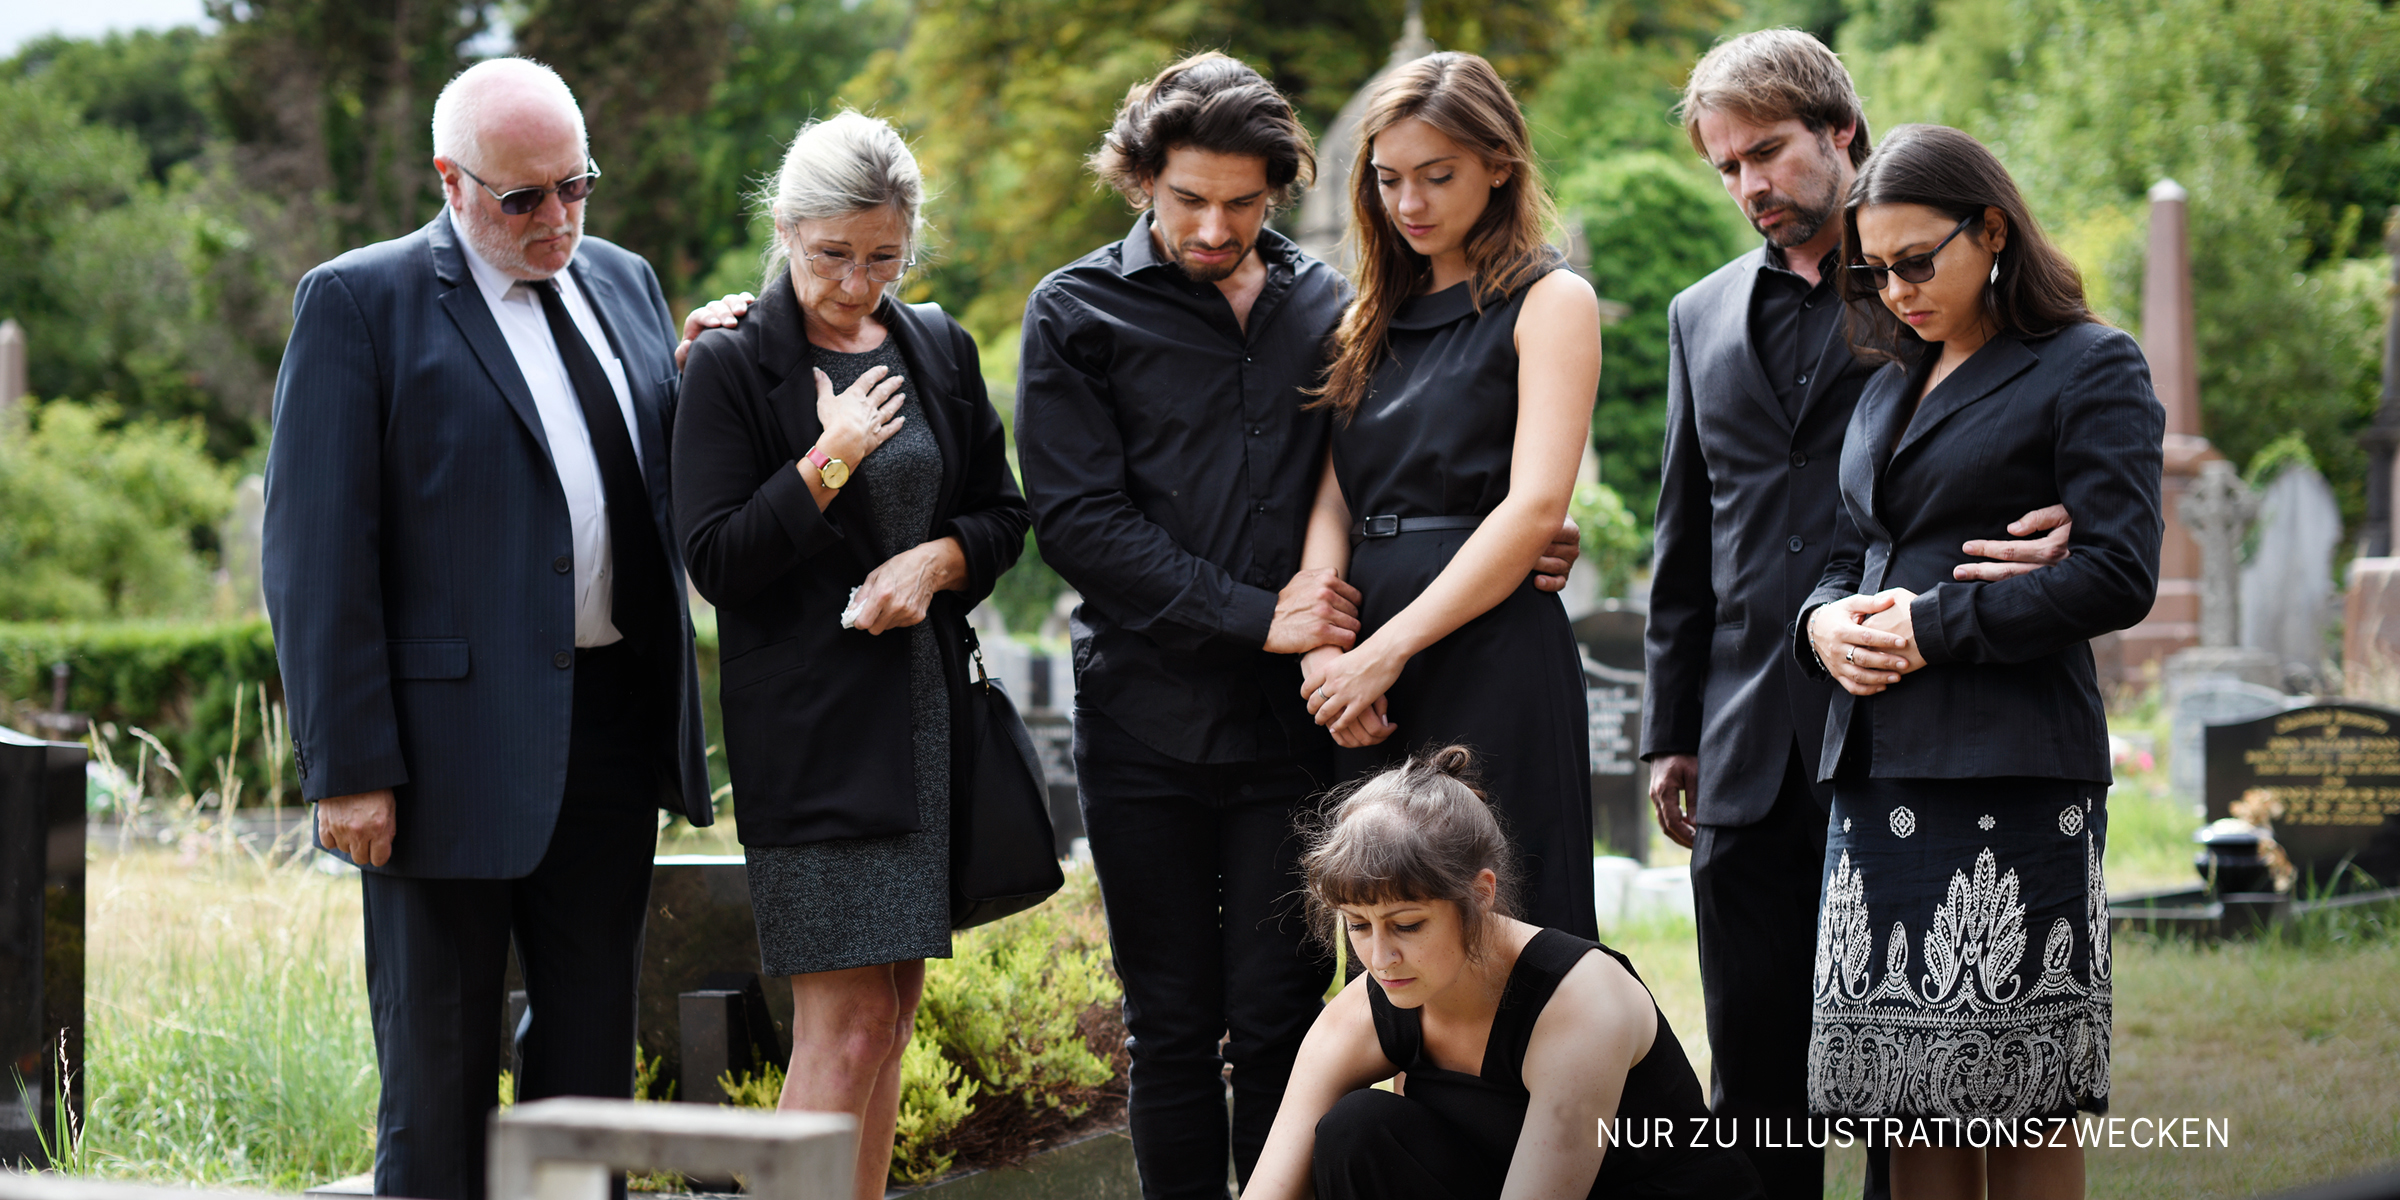 Familie auf dem Friedhof | Quelle: Shutterstock